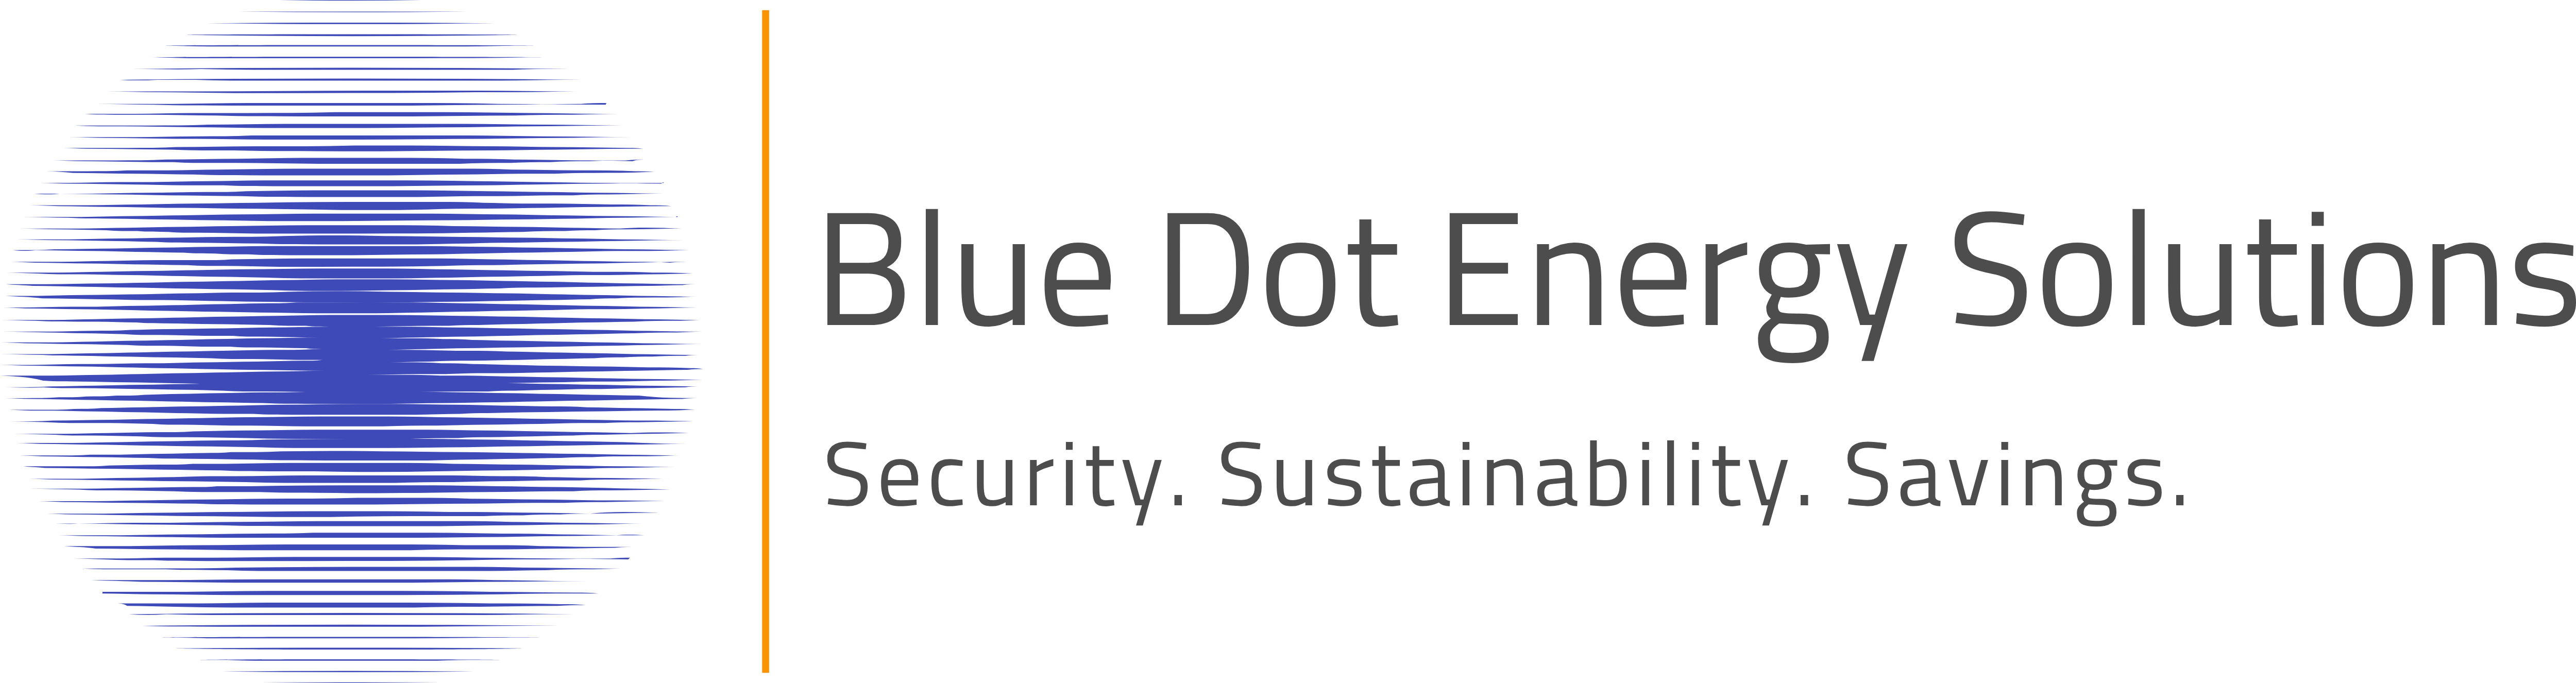 Blue Dot Energy Solutions Inc. logo